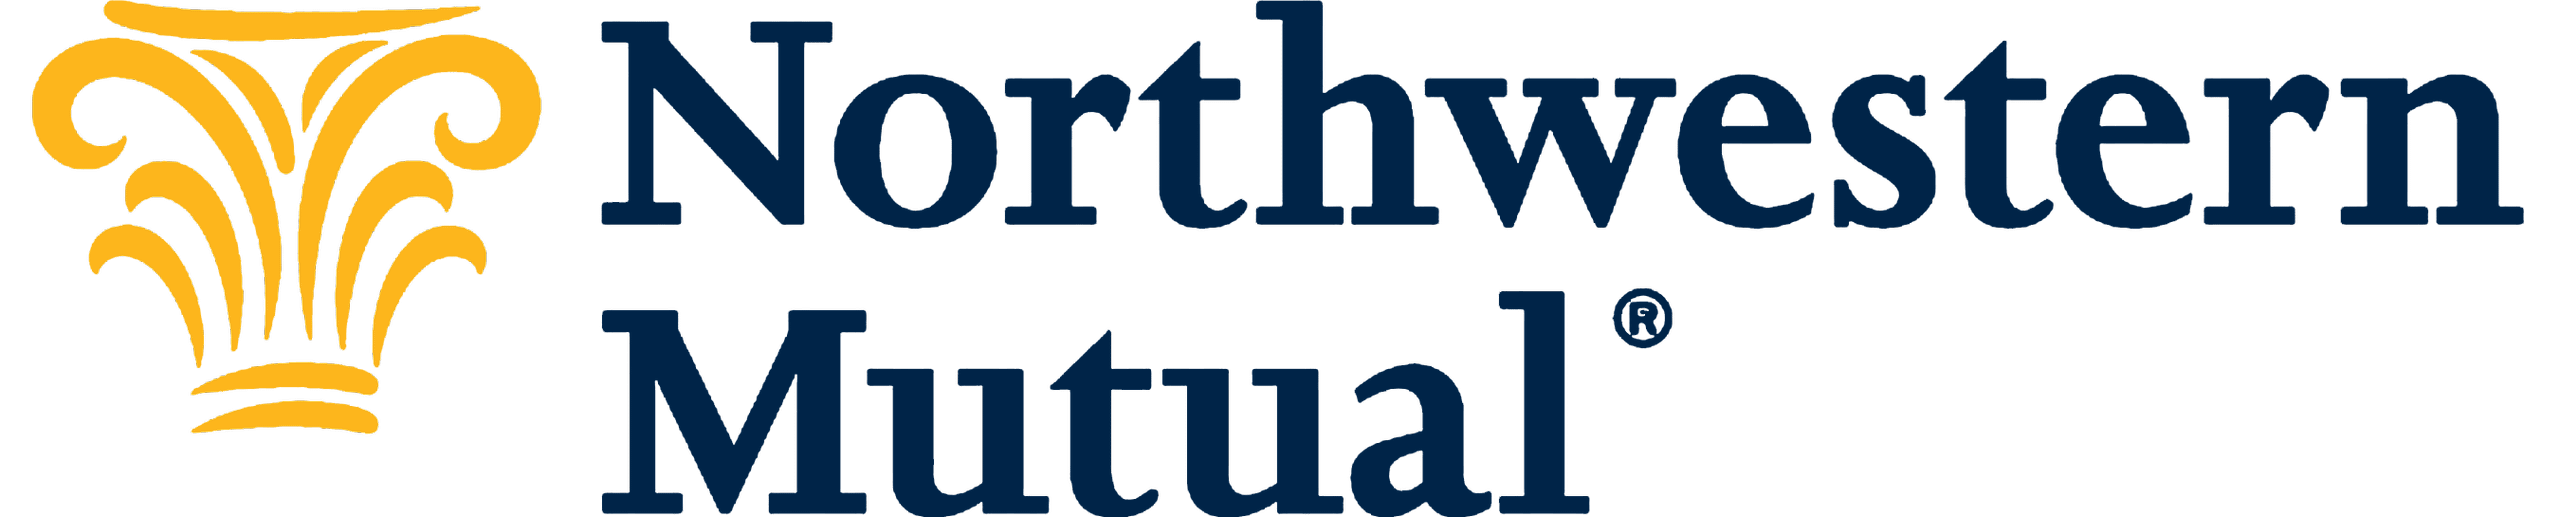 Northwestern Mutual Logo - Links to Northwestern Mutual Website